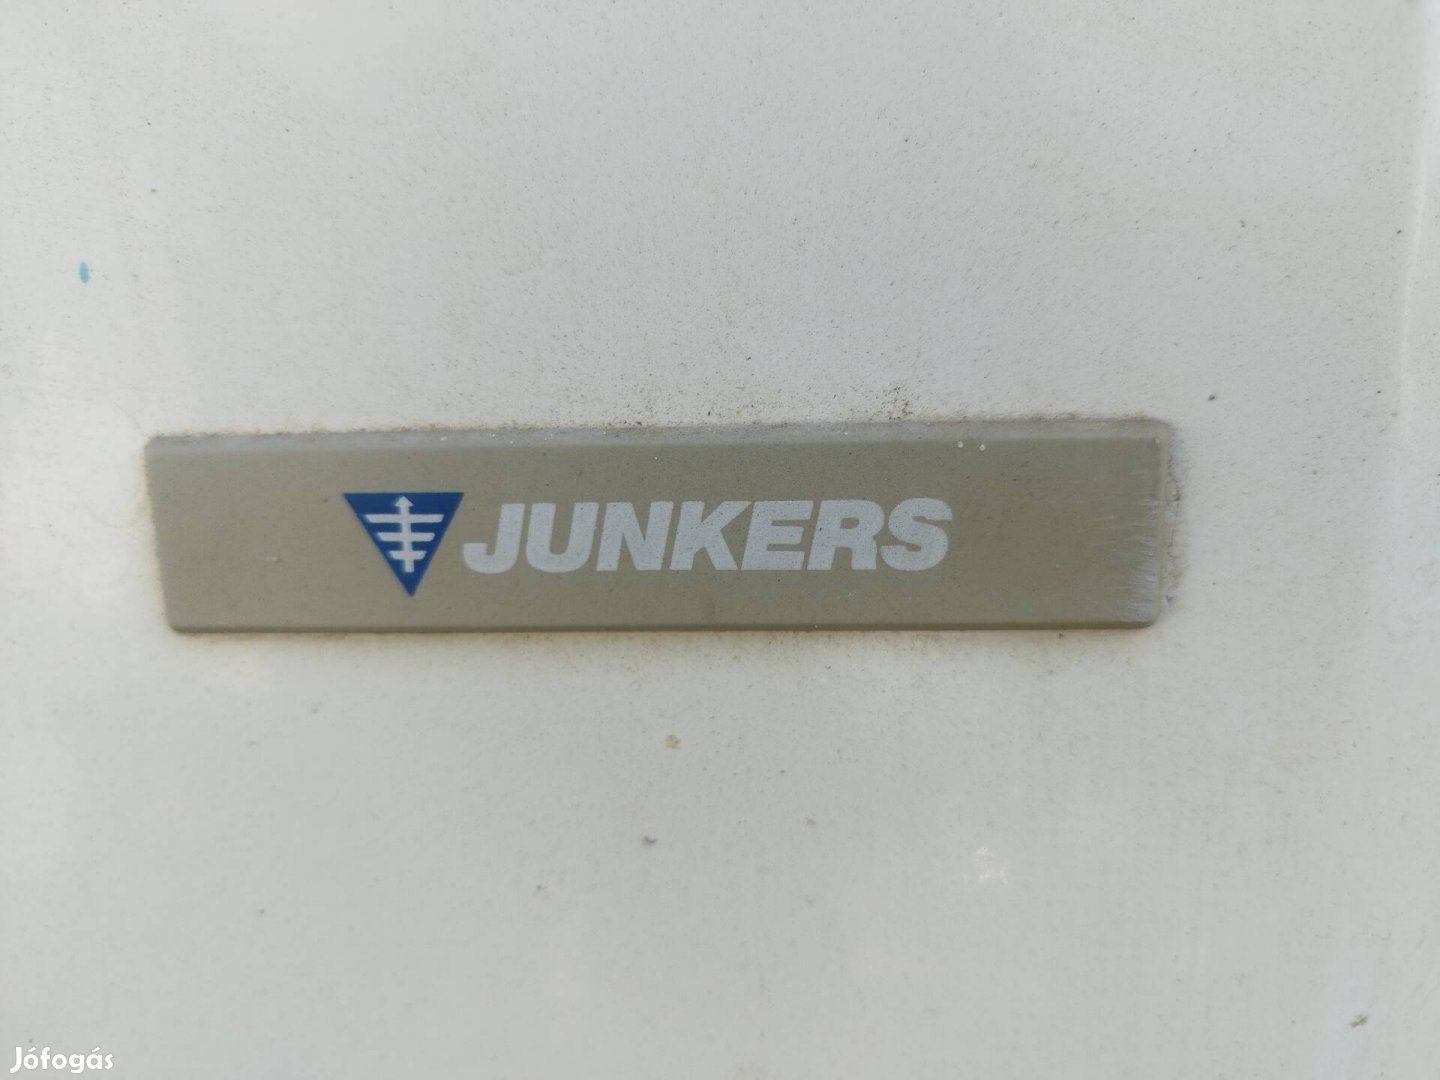 Junkers gázbojler